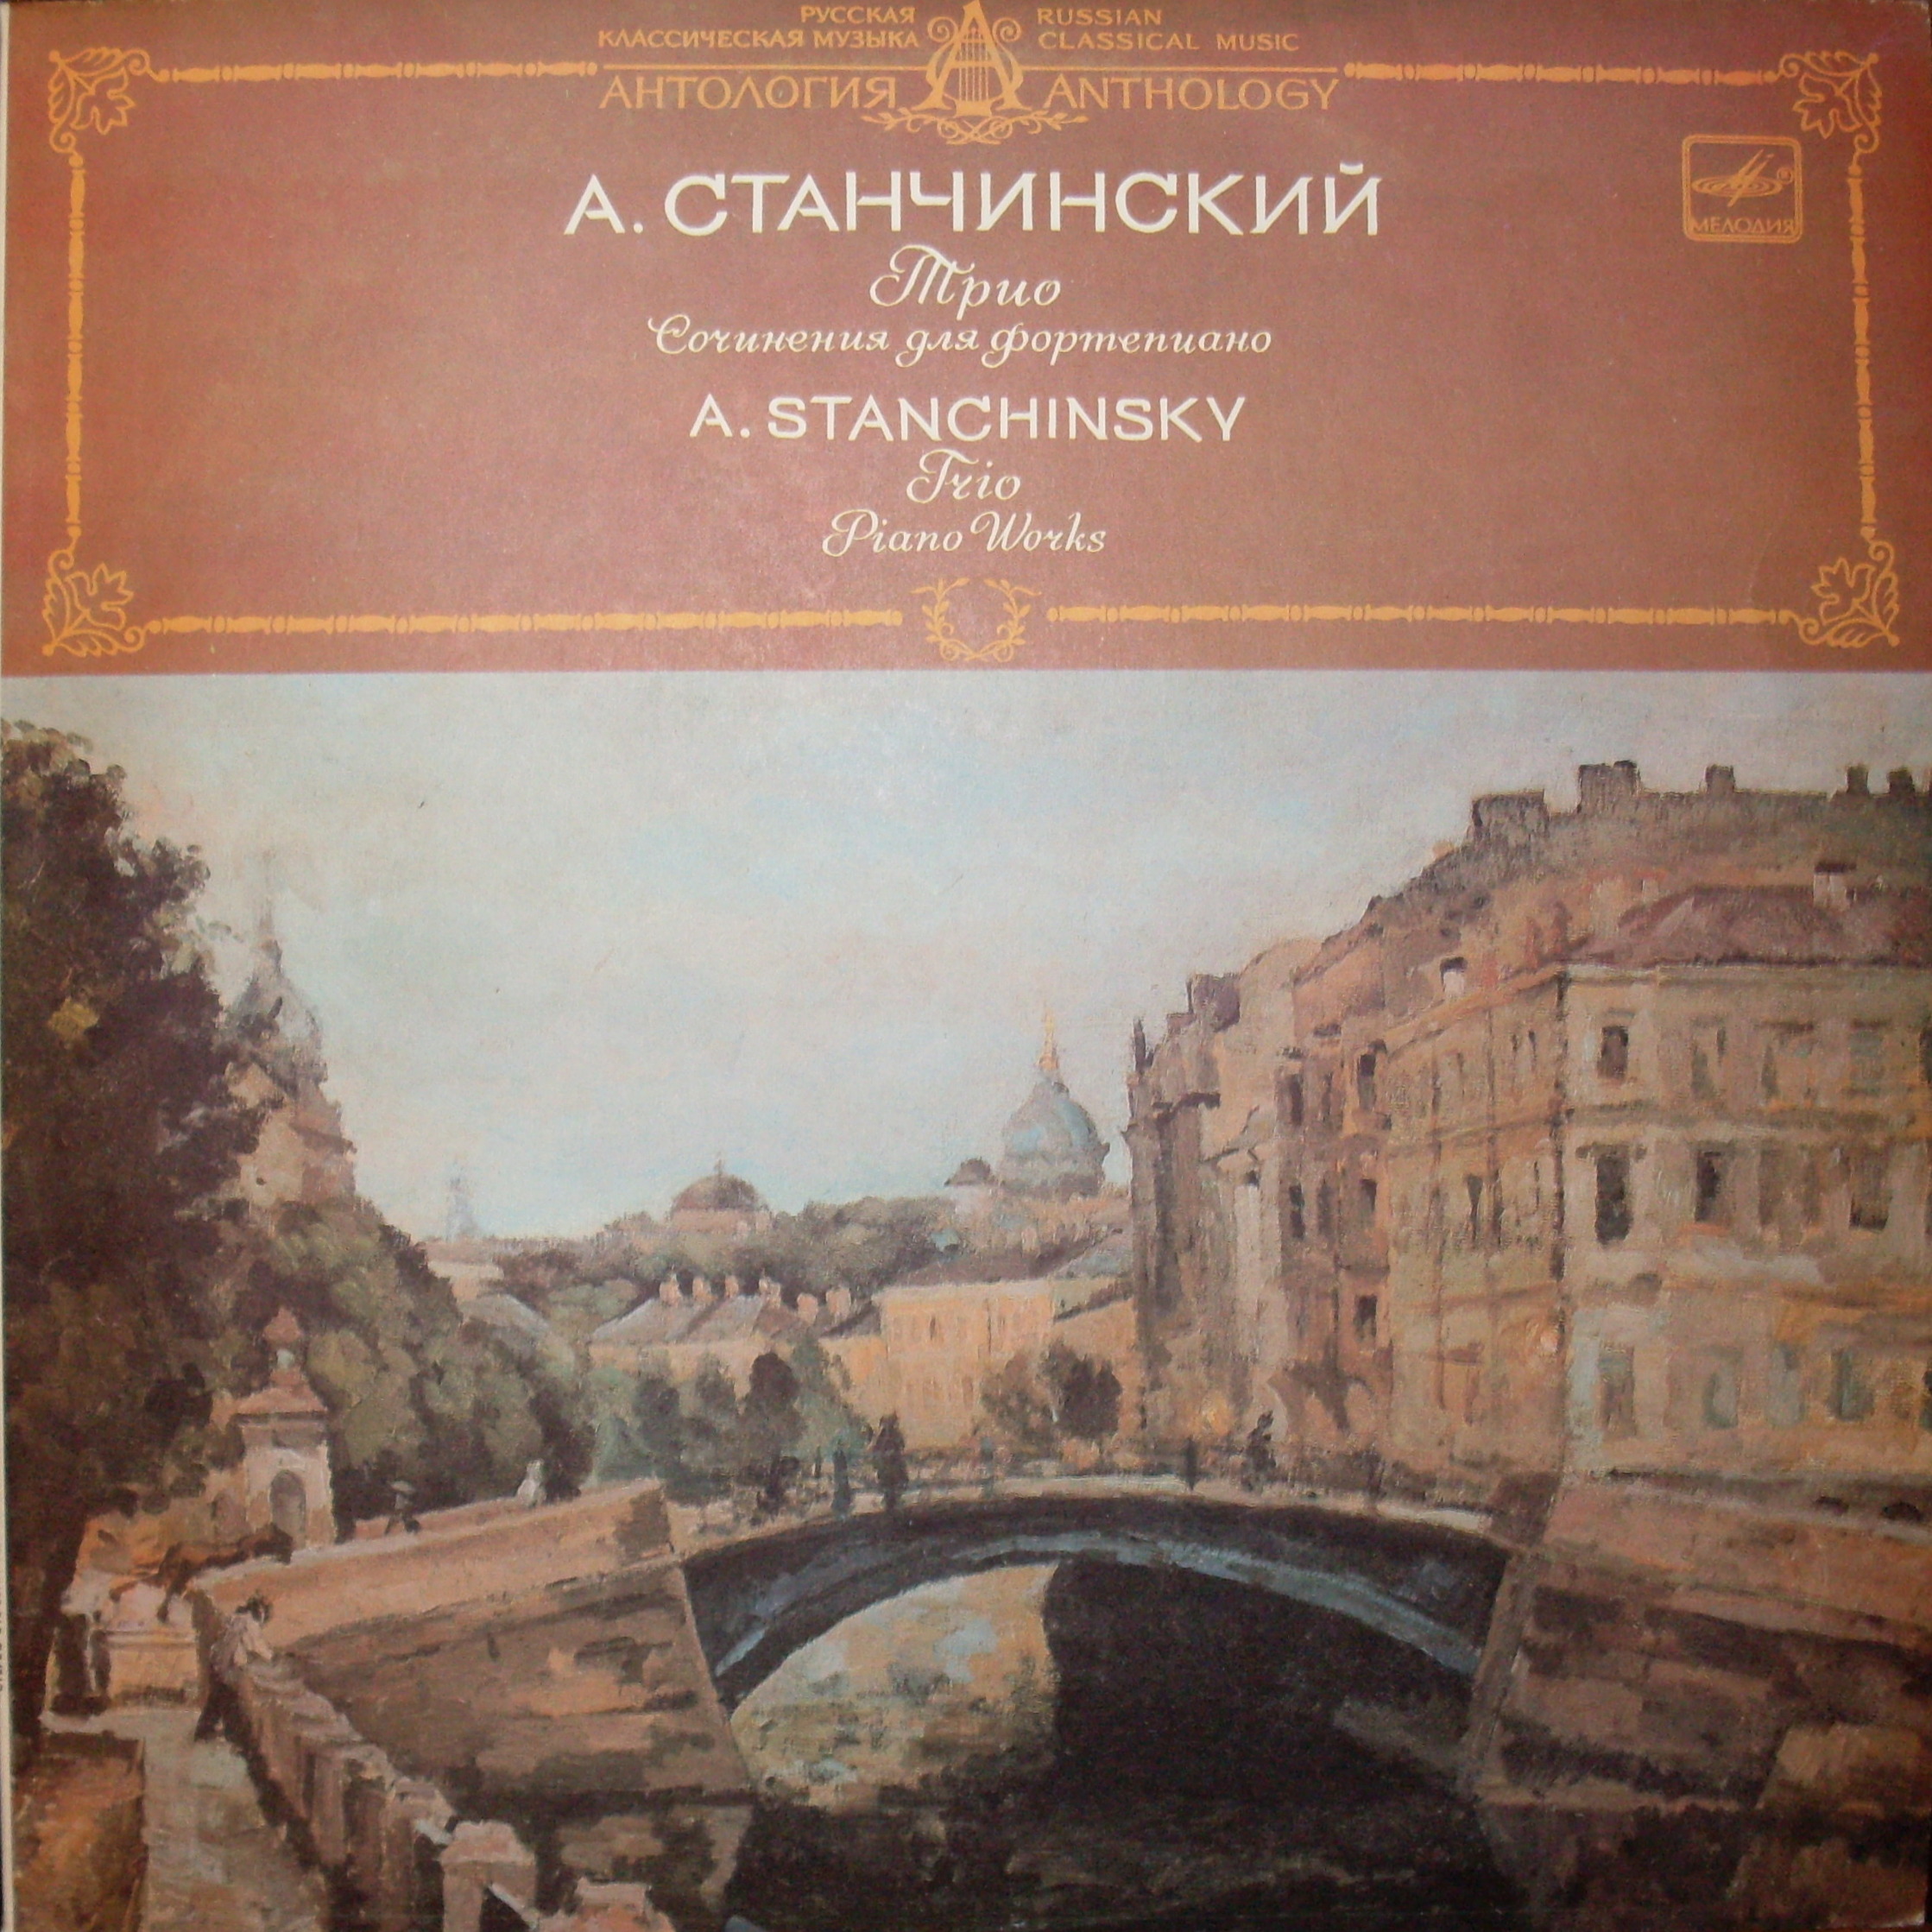 А. СТАНЧИНСКИЙ (1888-1914)